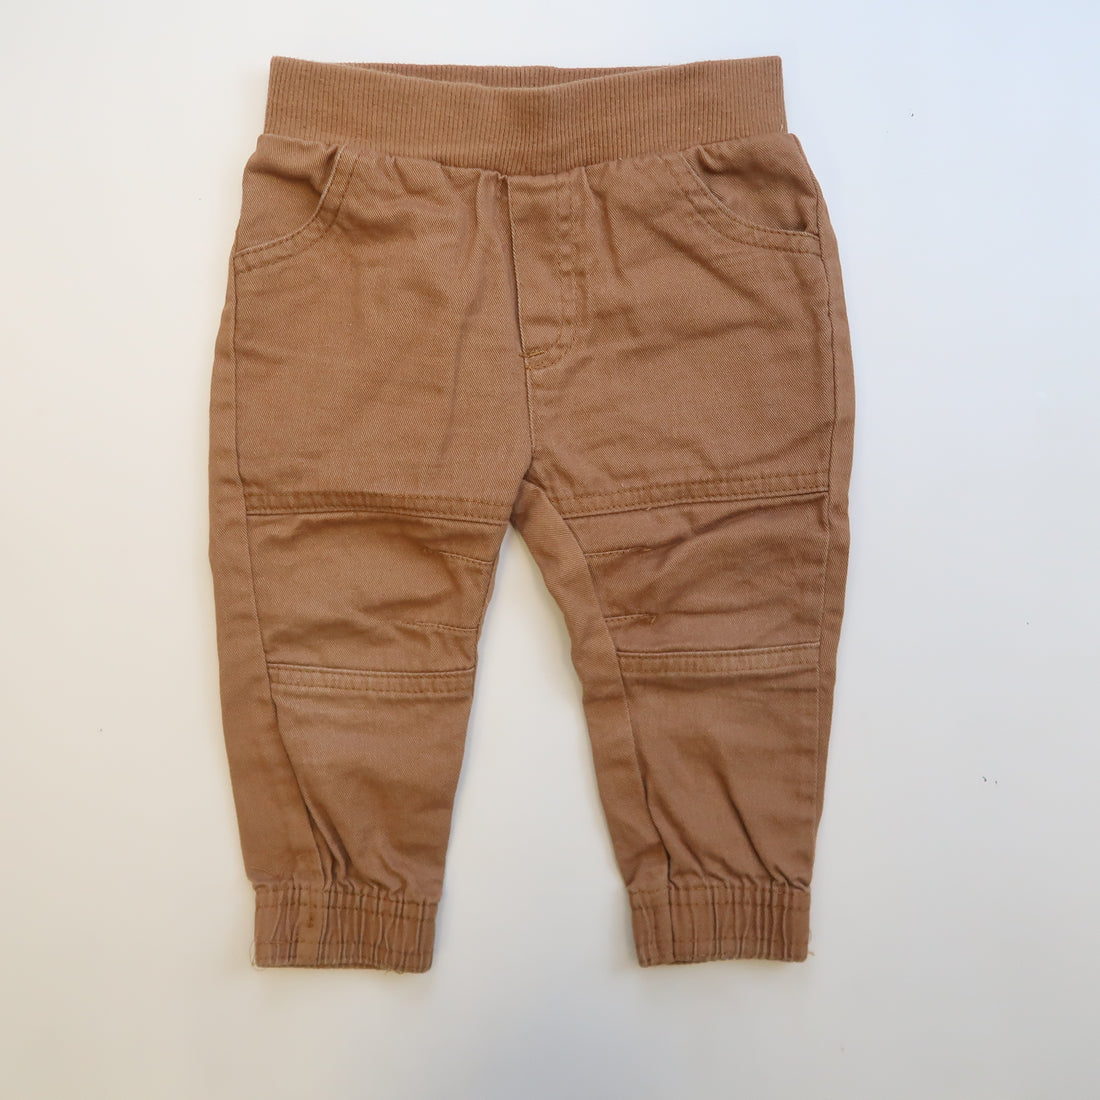 Unknown Brand - Pants (18M)